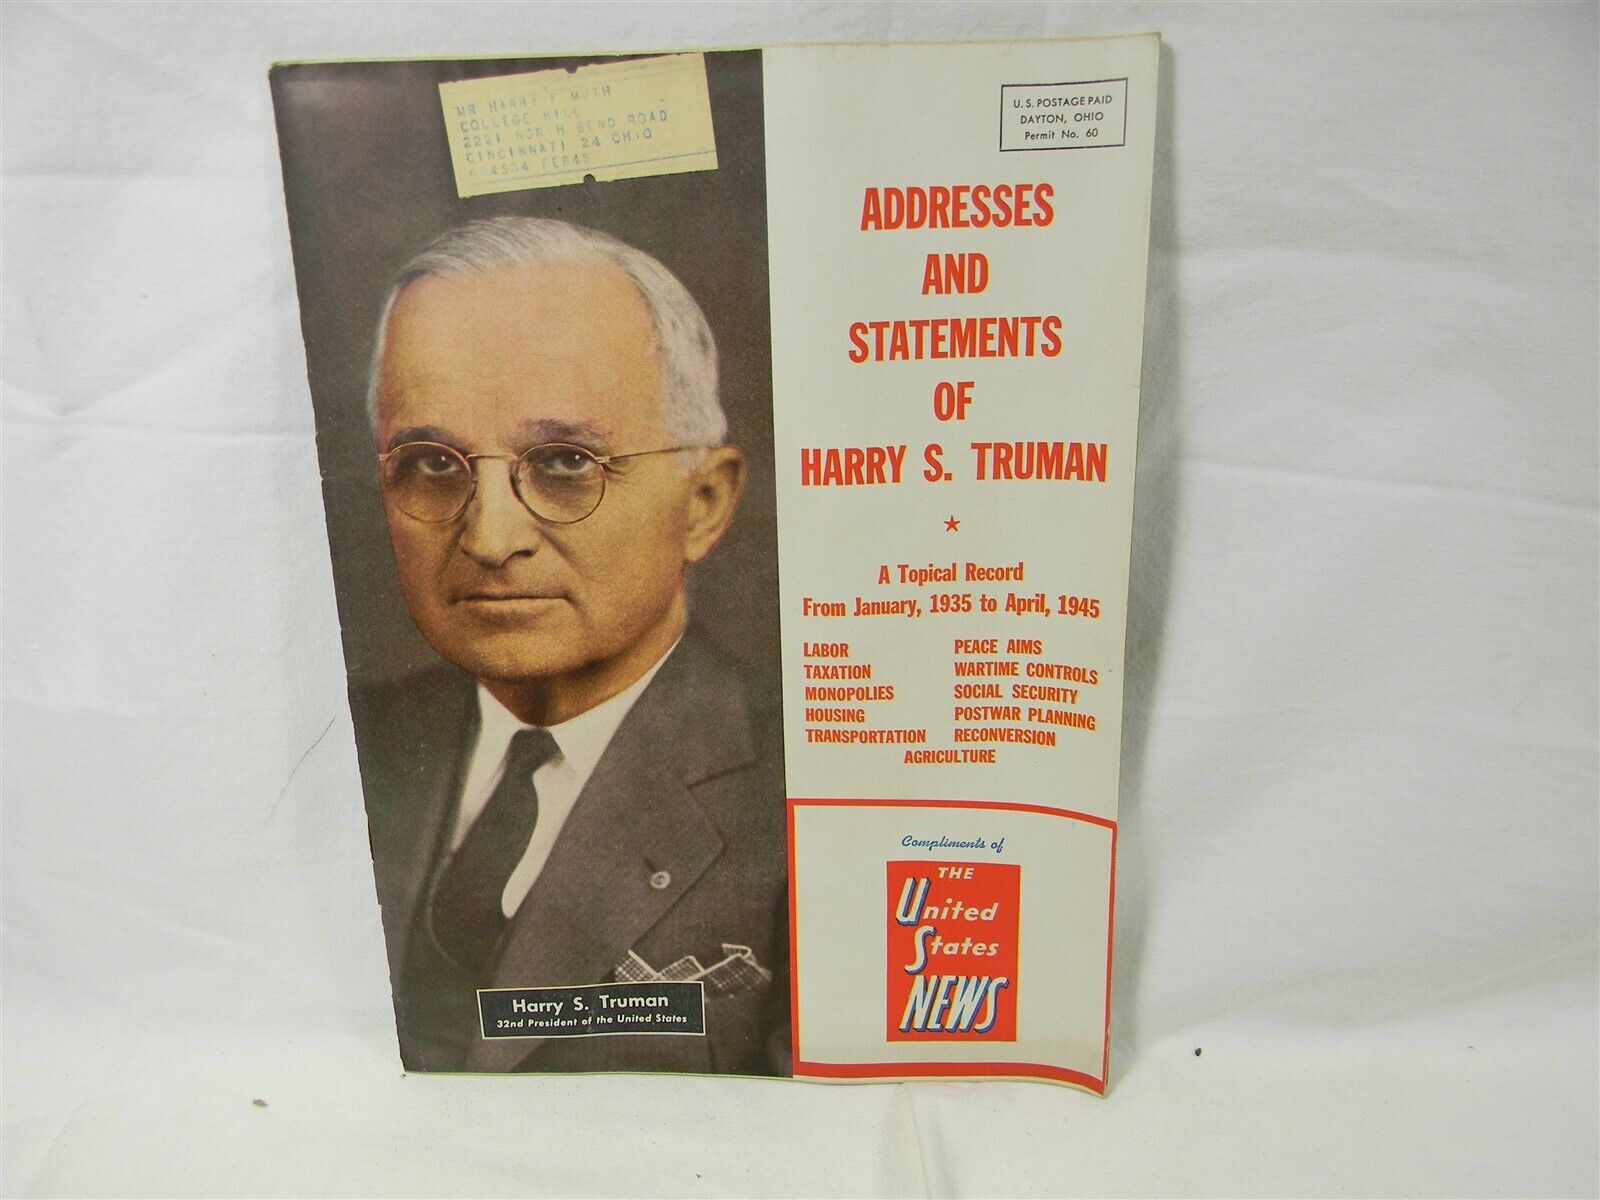 WWII WW2 Harry S. Truman Addresses Statements United States News Magazine - M106